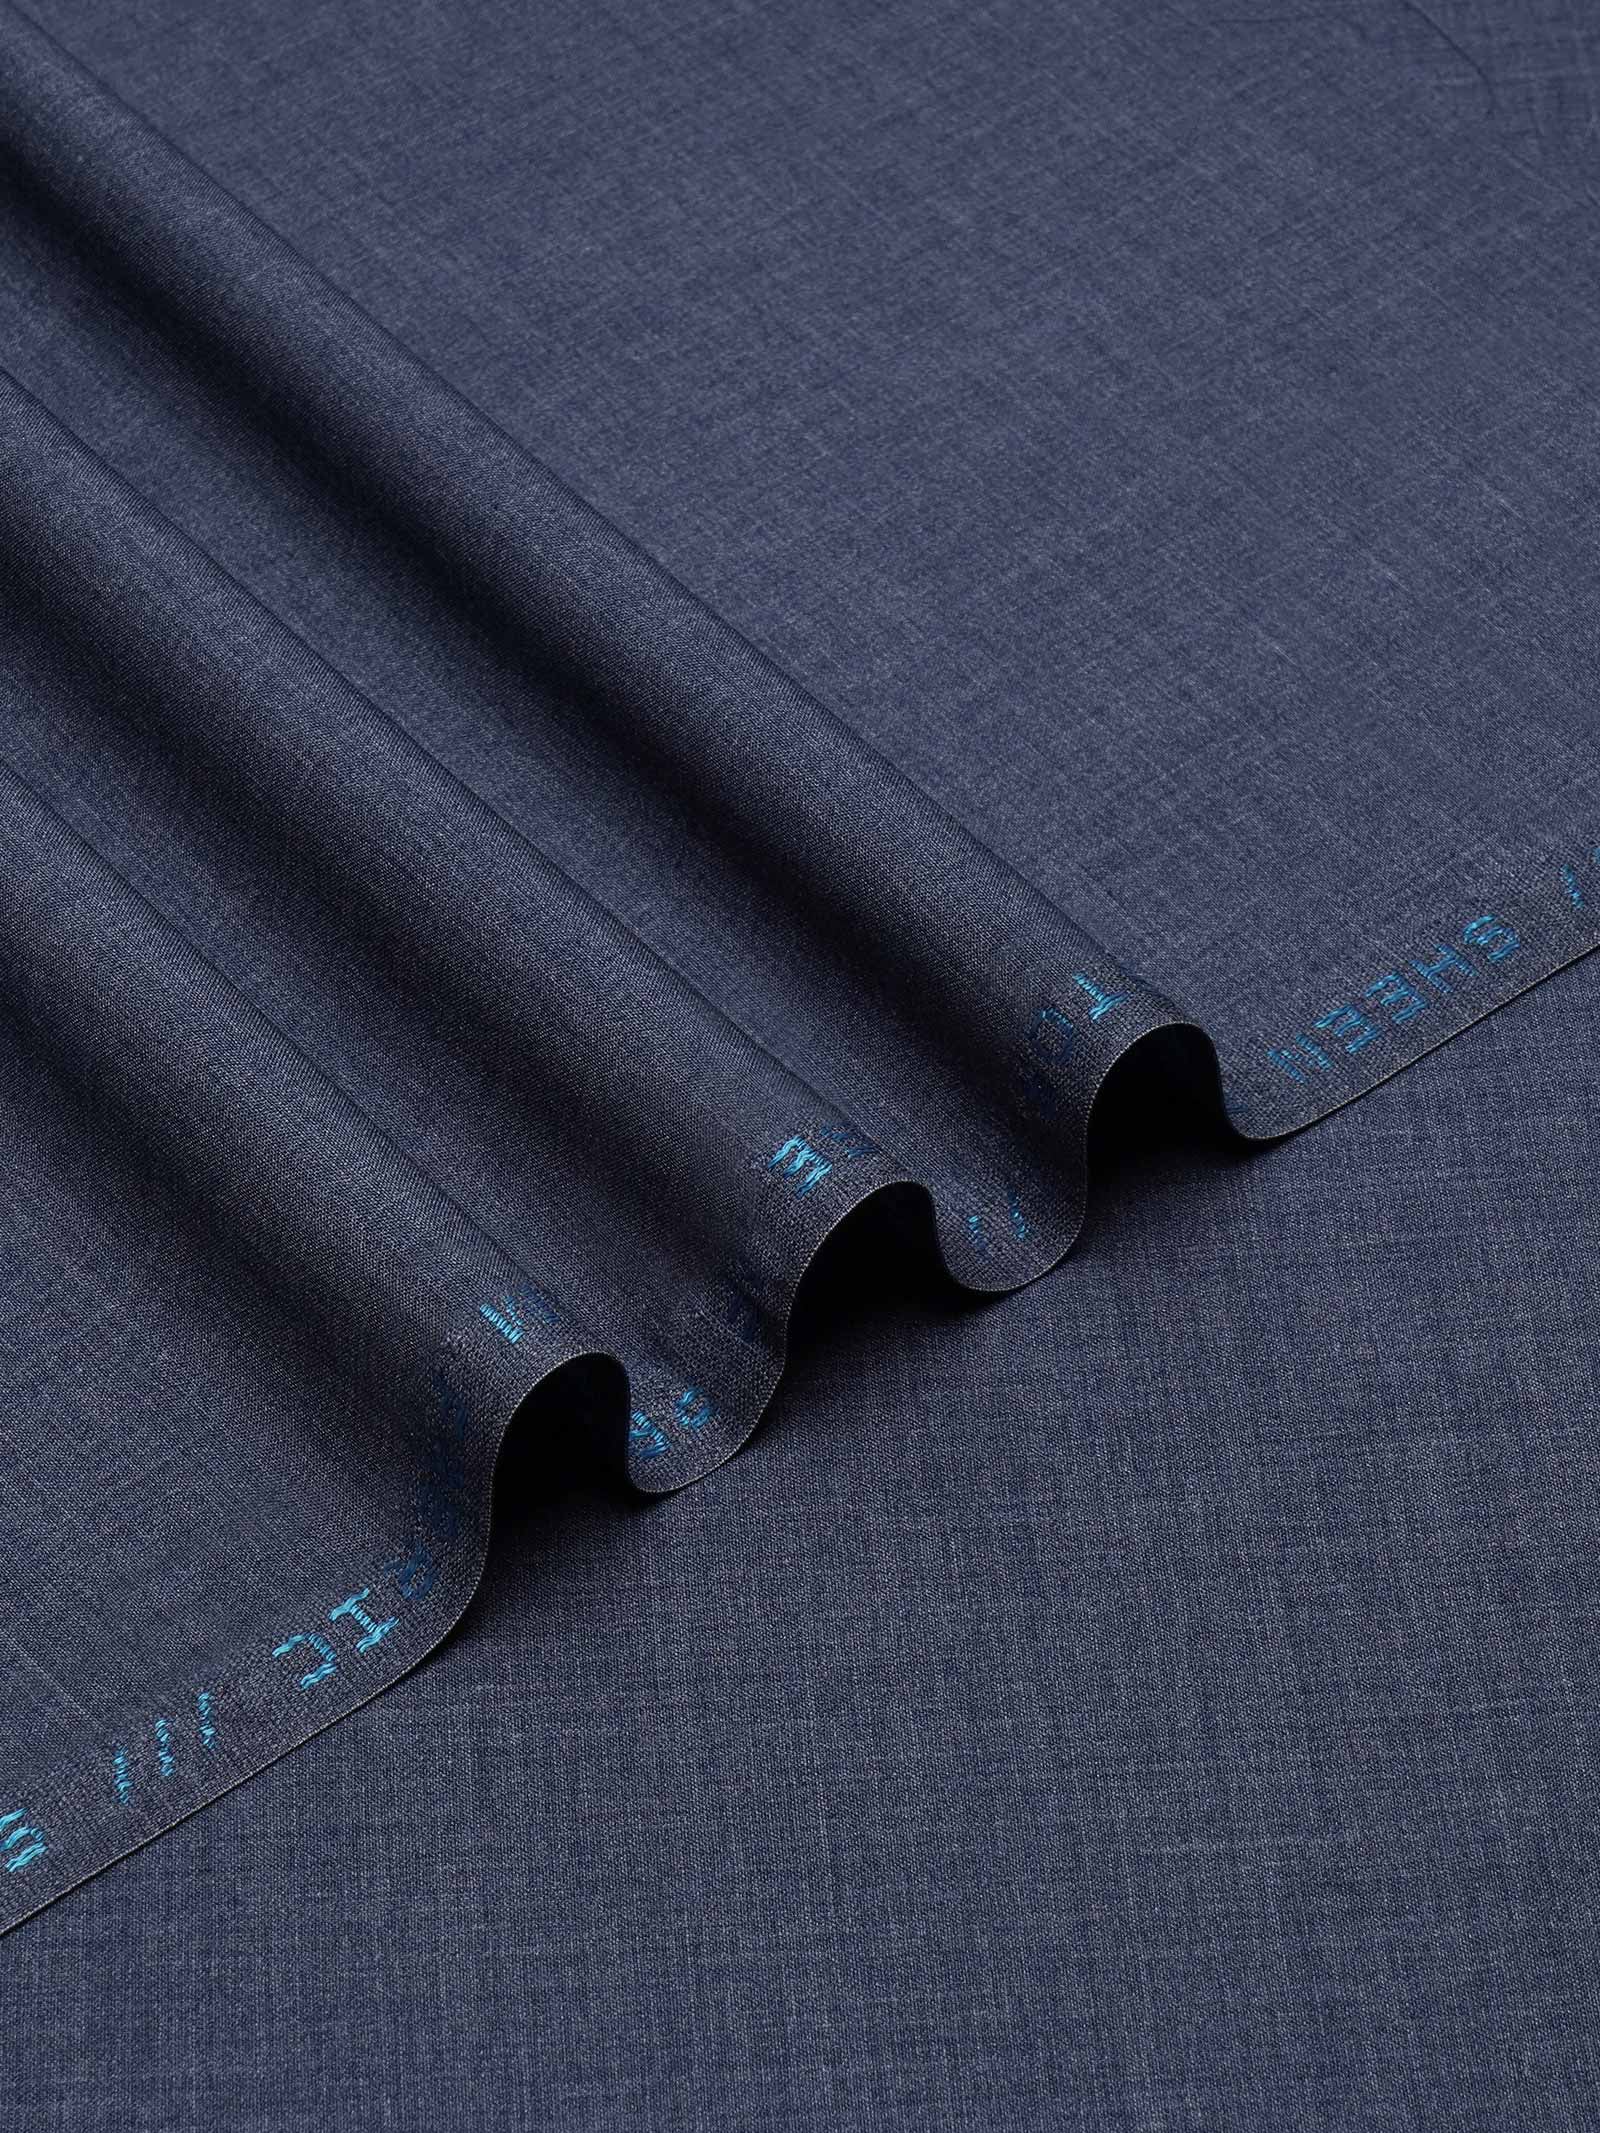 Arvind Men's Cotton Self Design Unstitched Jeans Fabric (Navy Blue)